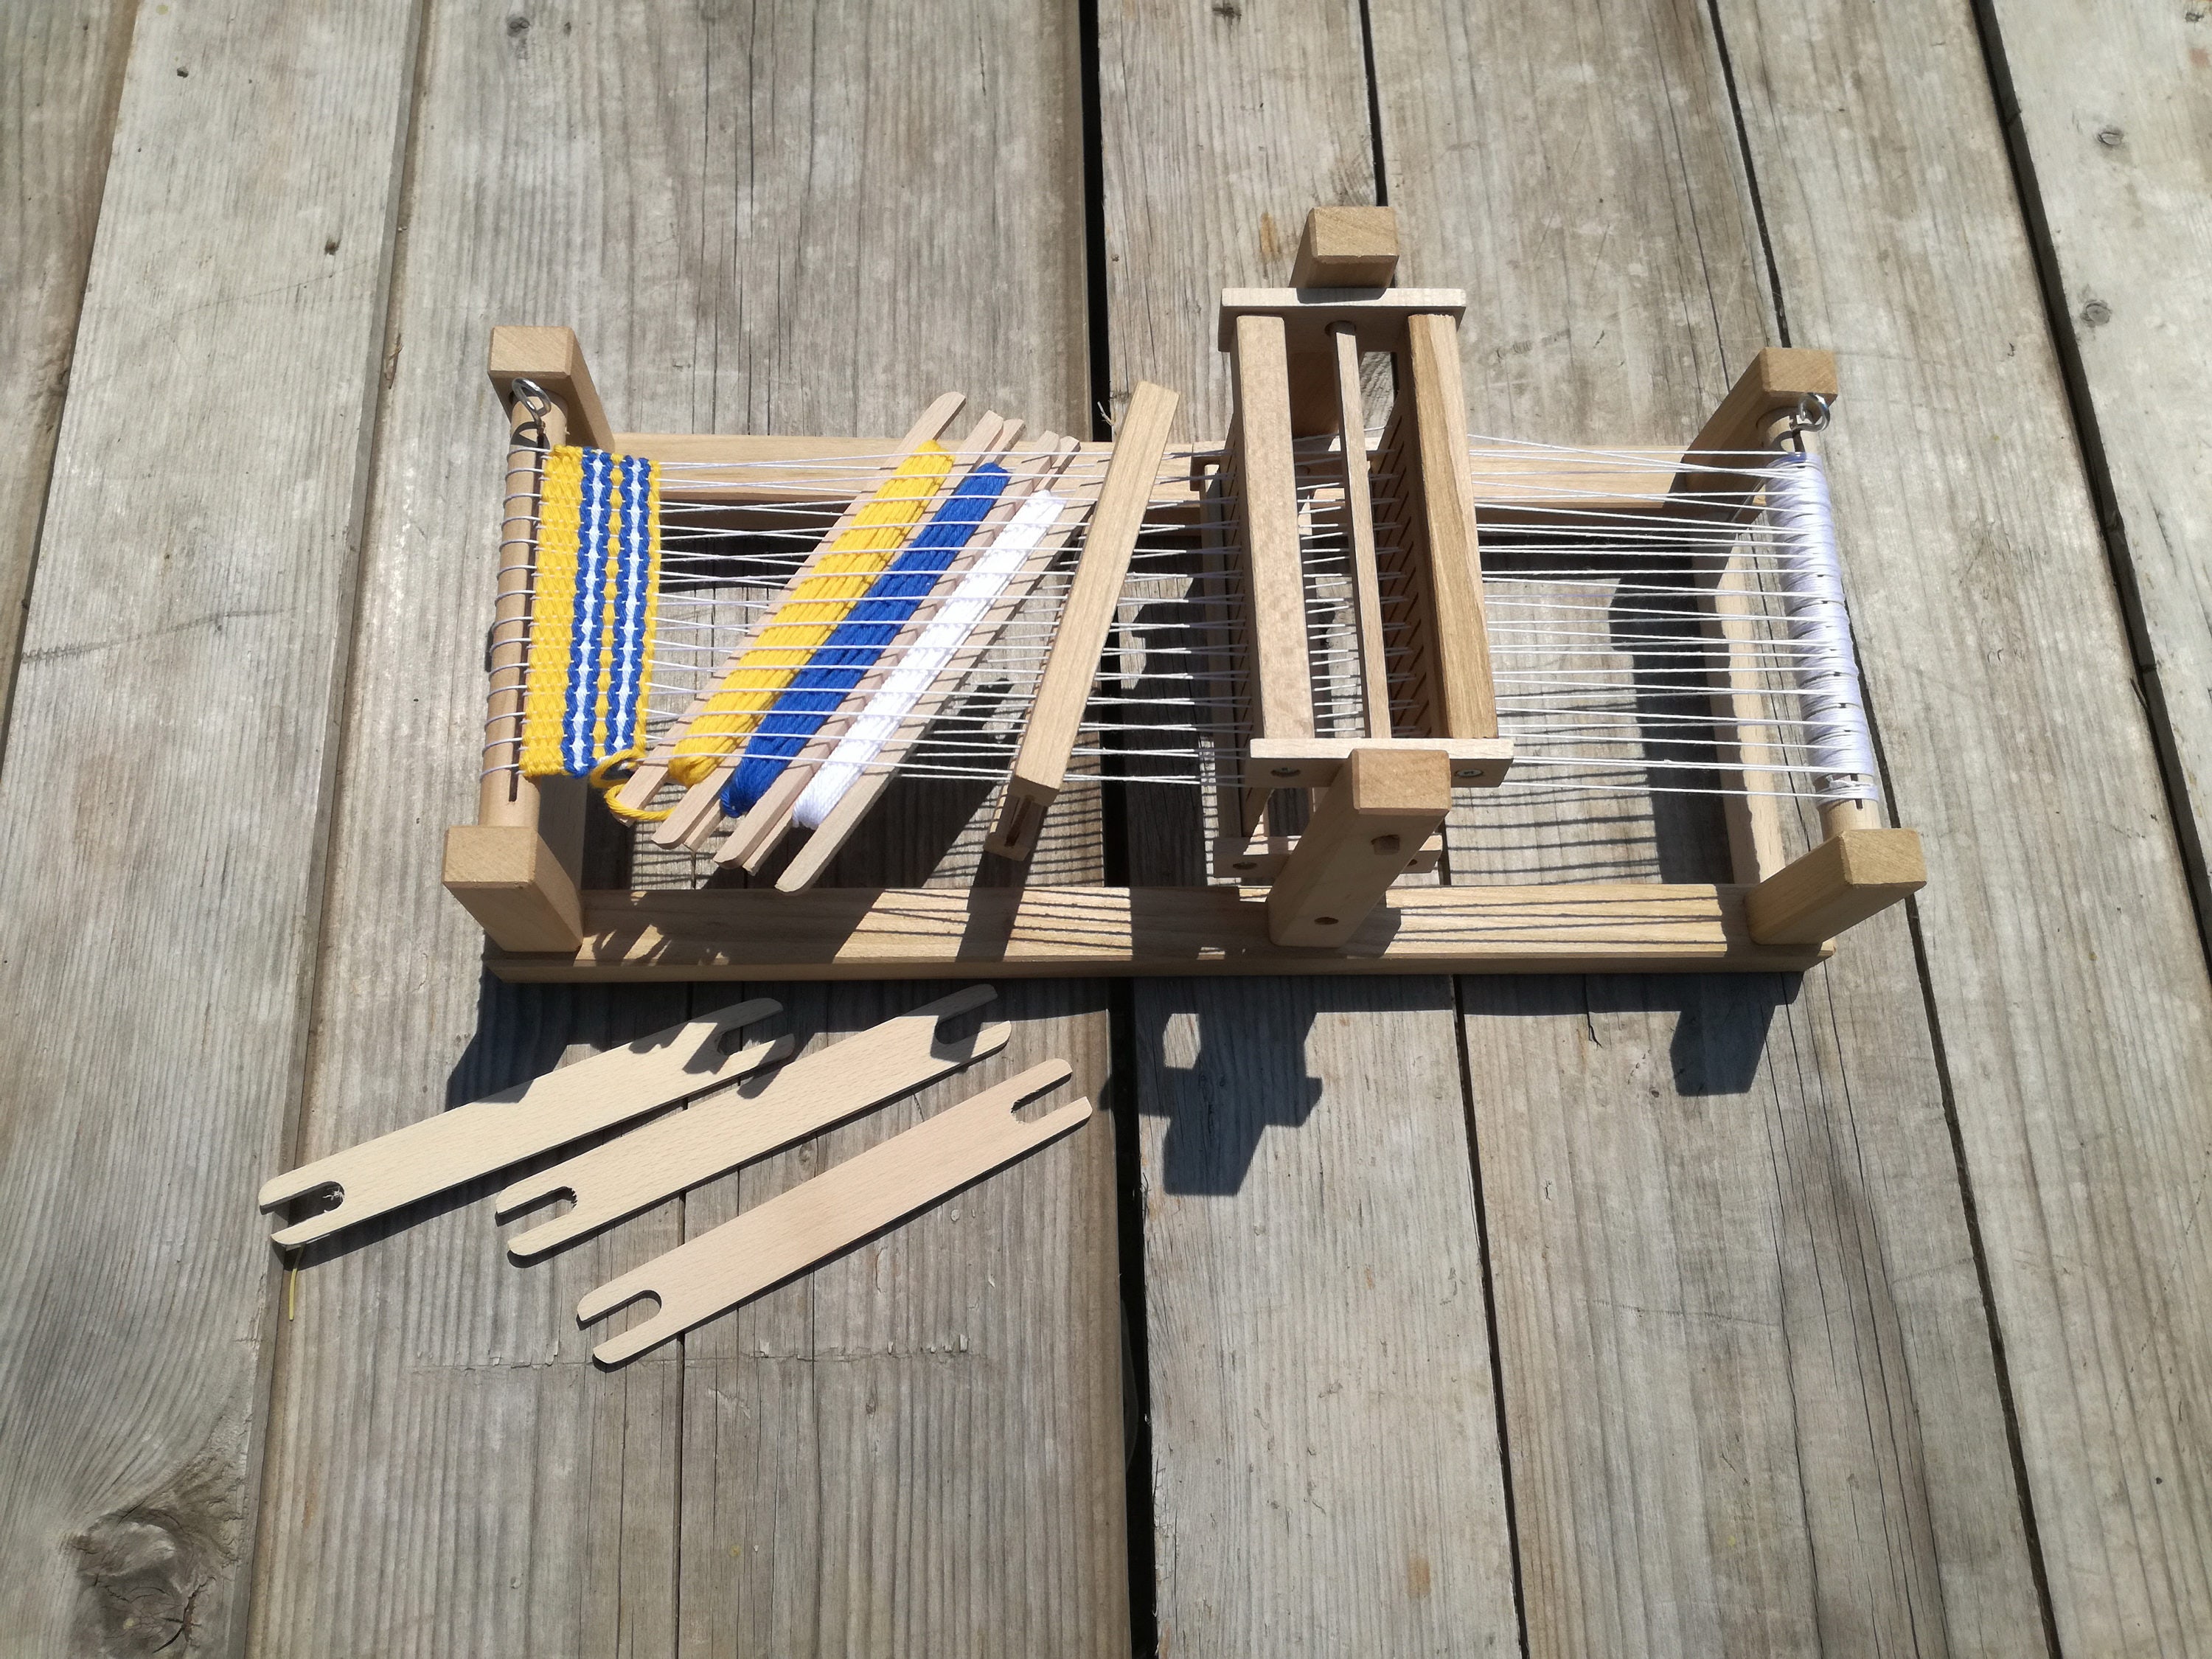 Wooden Weaving Loom Kit – pucciManuli